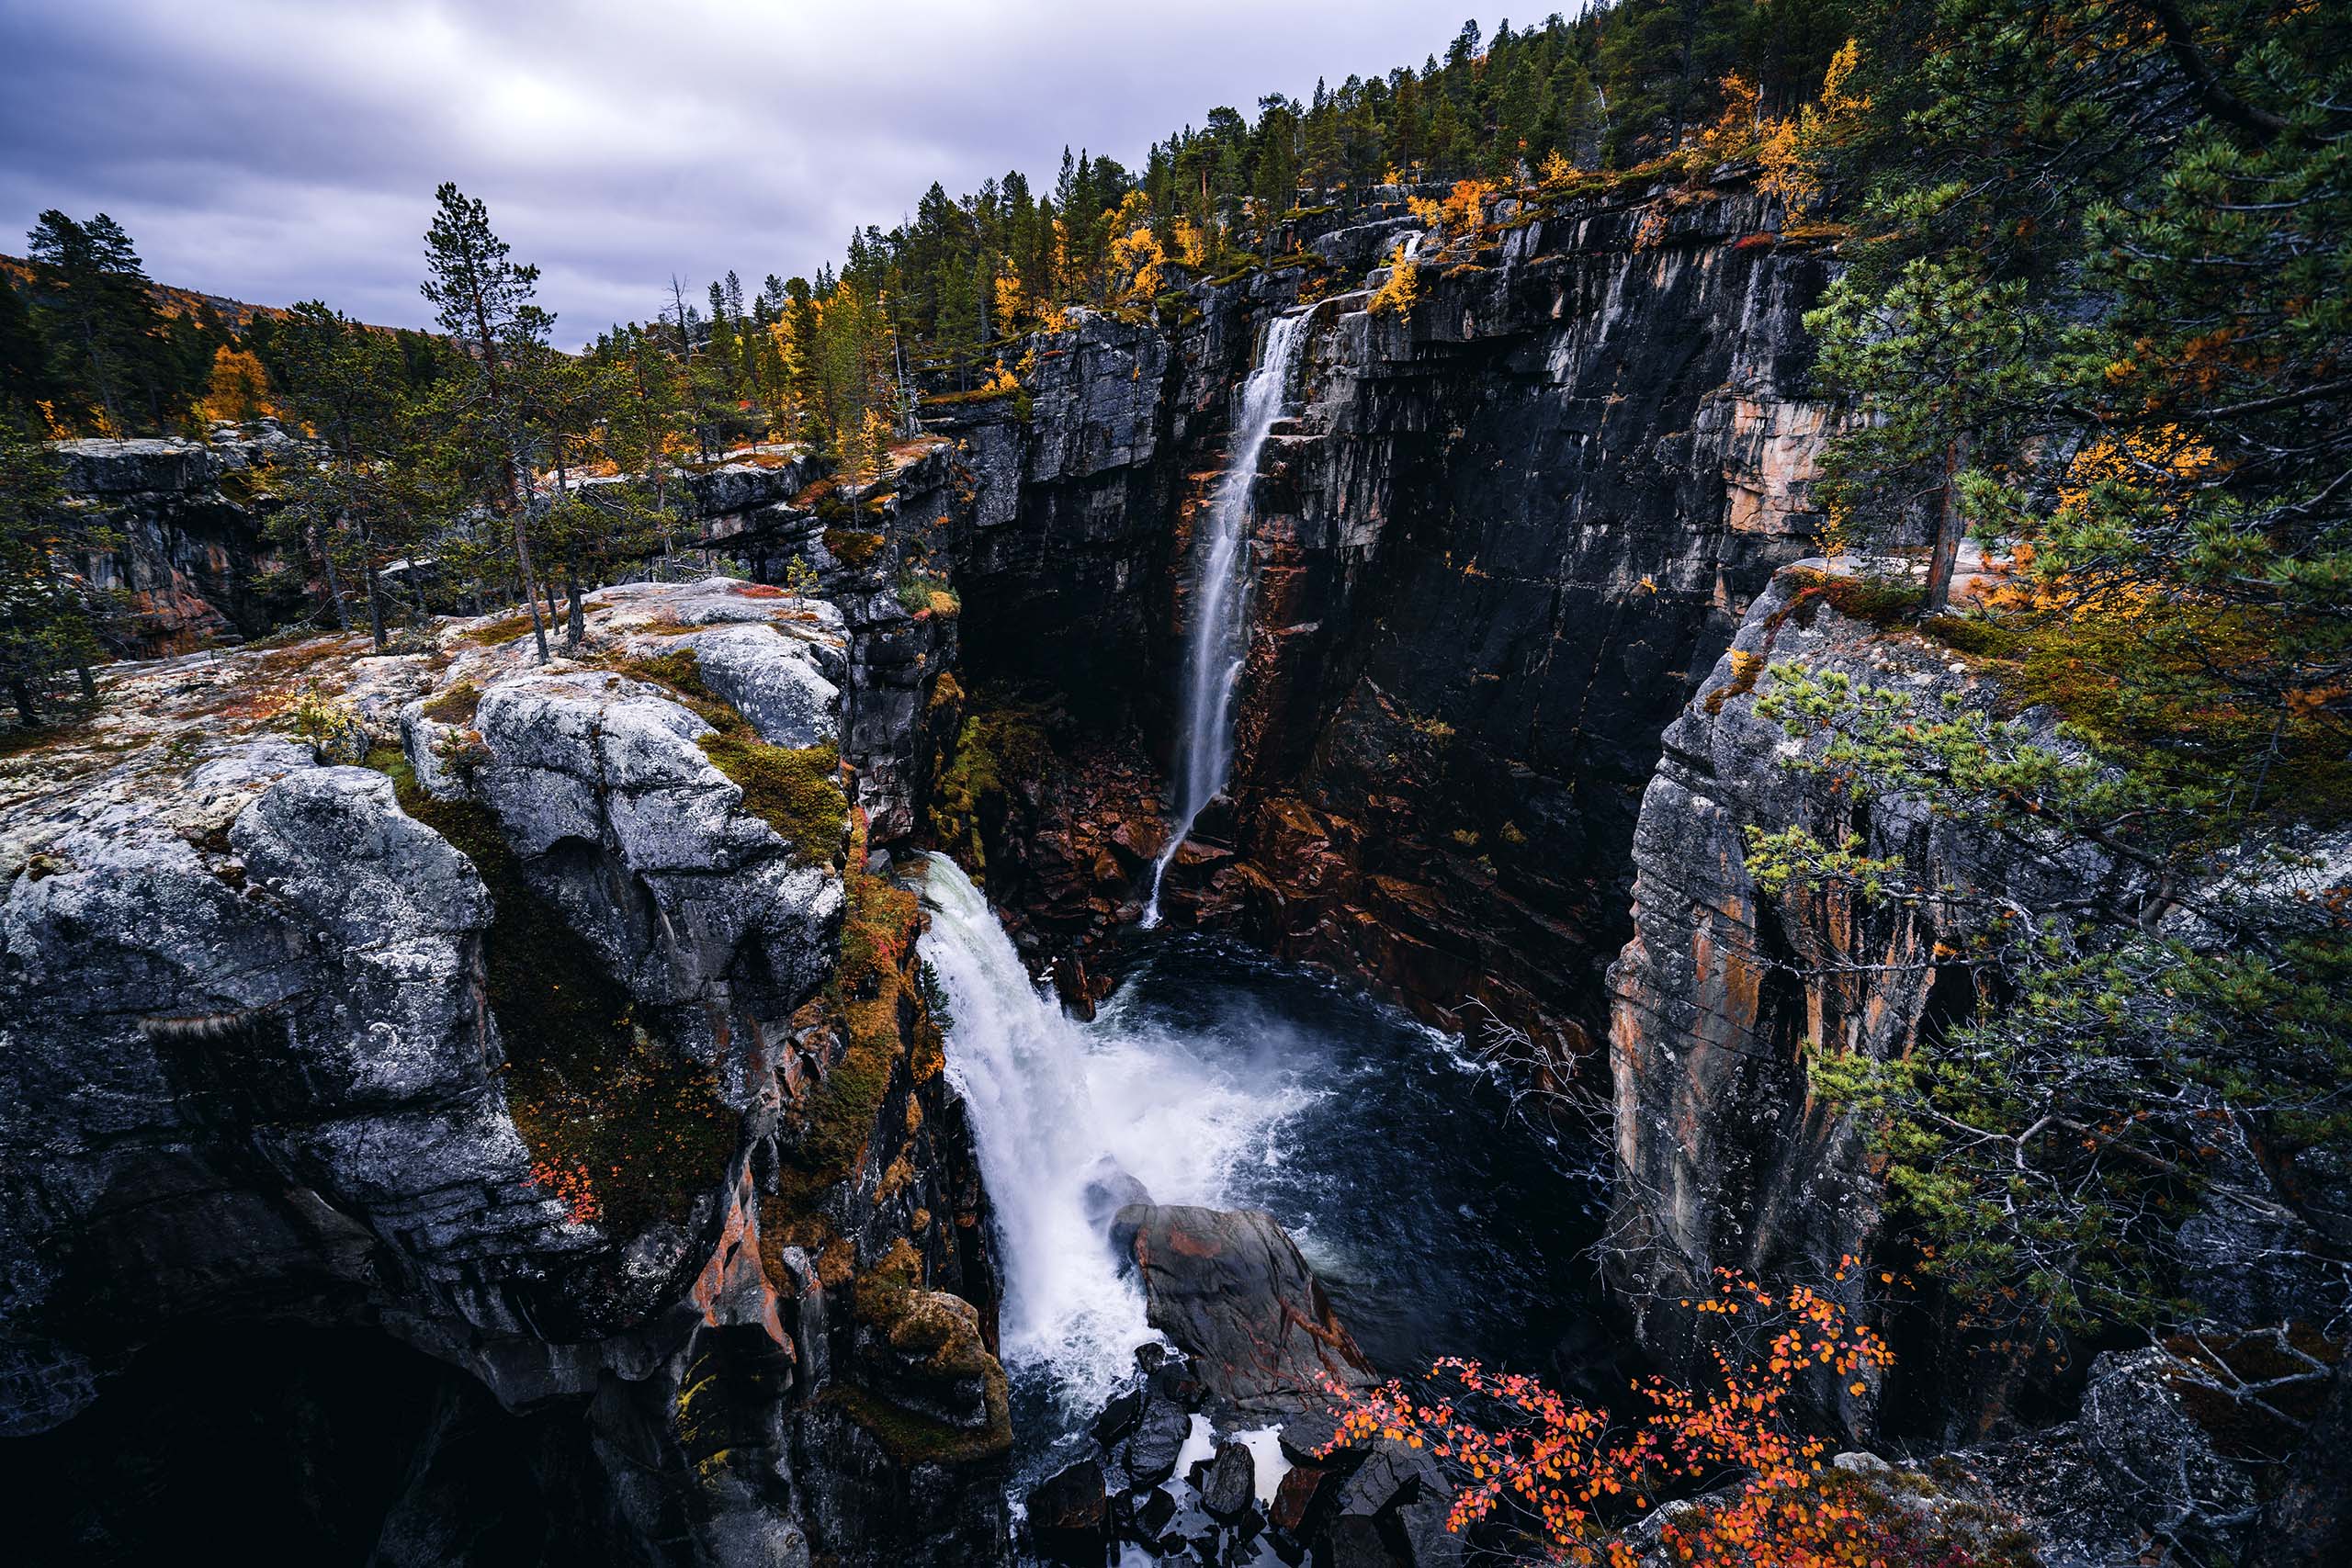 Imofossen waterfall